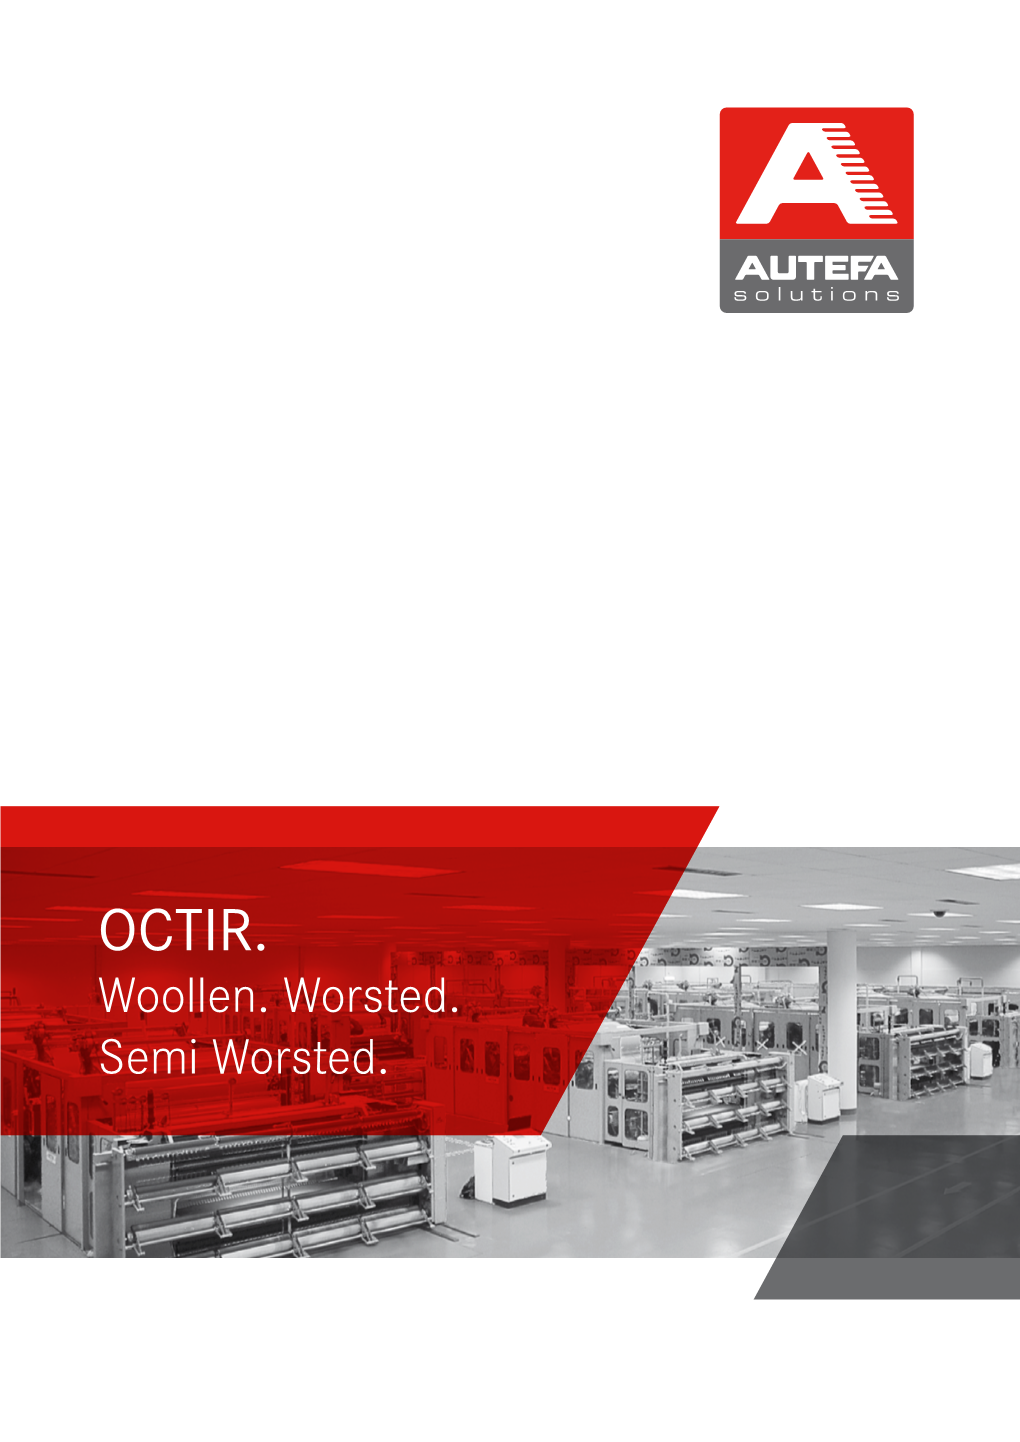 AUTEFA Solutions: OCTIR